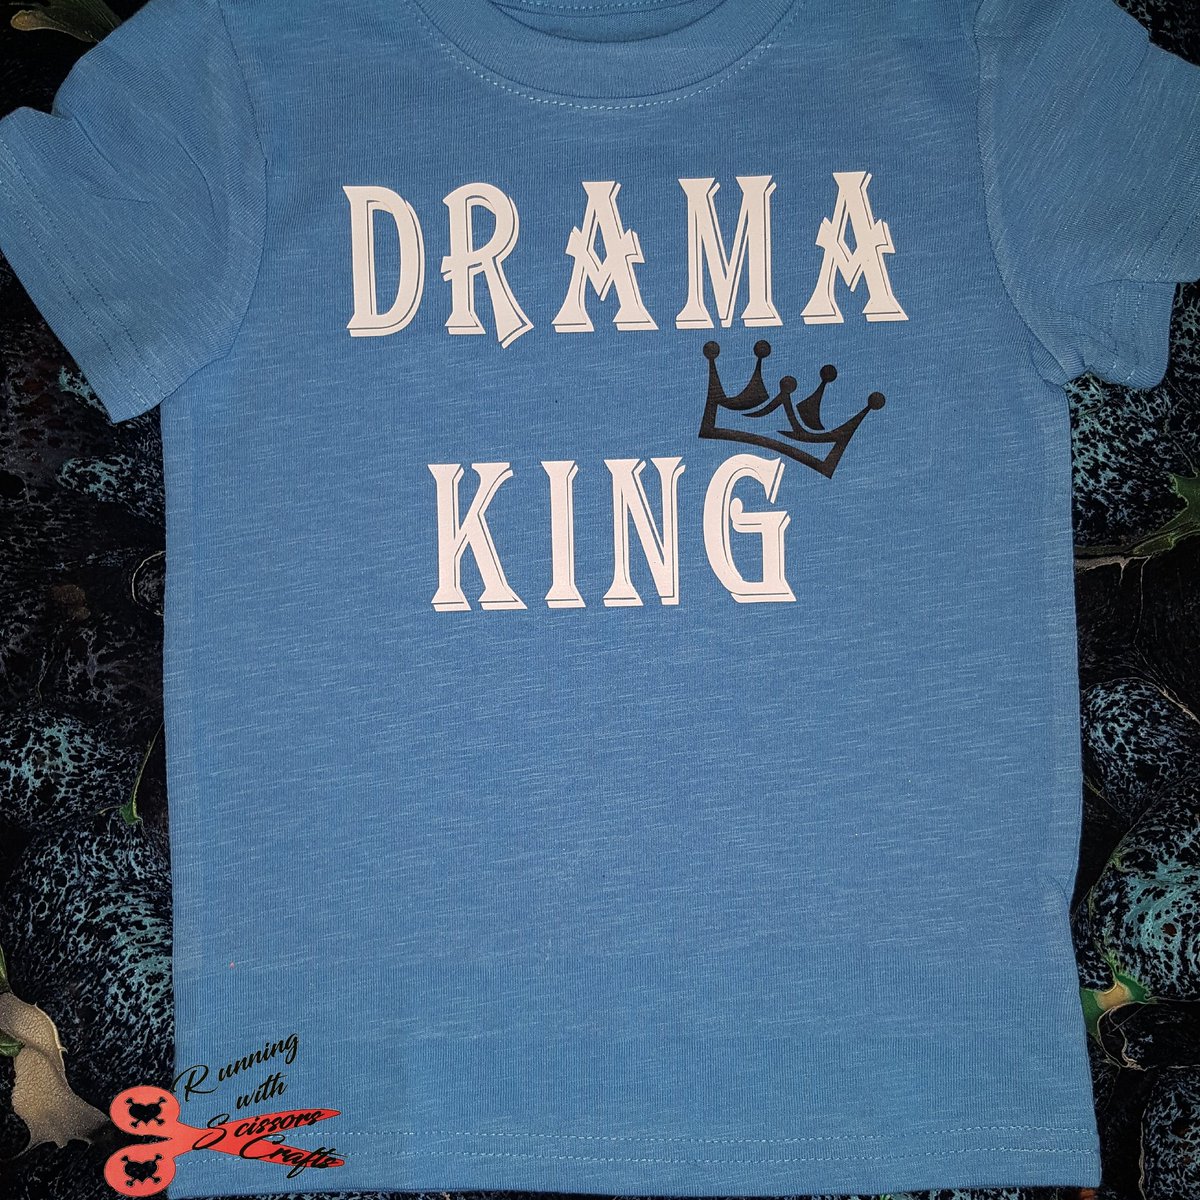 Drama King in blue 😍
#kidsclothes #toddlers #toddlershirt #customshirts #runningwithscissorscrafts #mylilman #ilovemyson #dramaking #boysaredramatictoo #personalizedshirt #giftsforhim #babyshowergifts #birthdaygifts #boymom